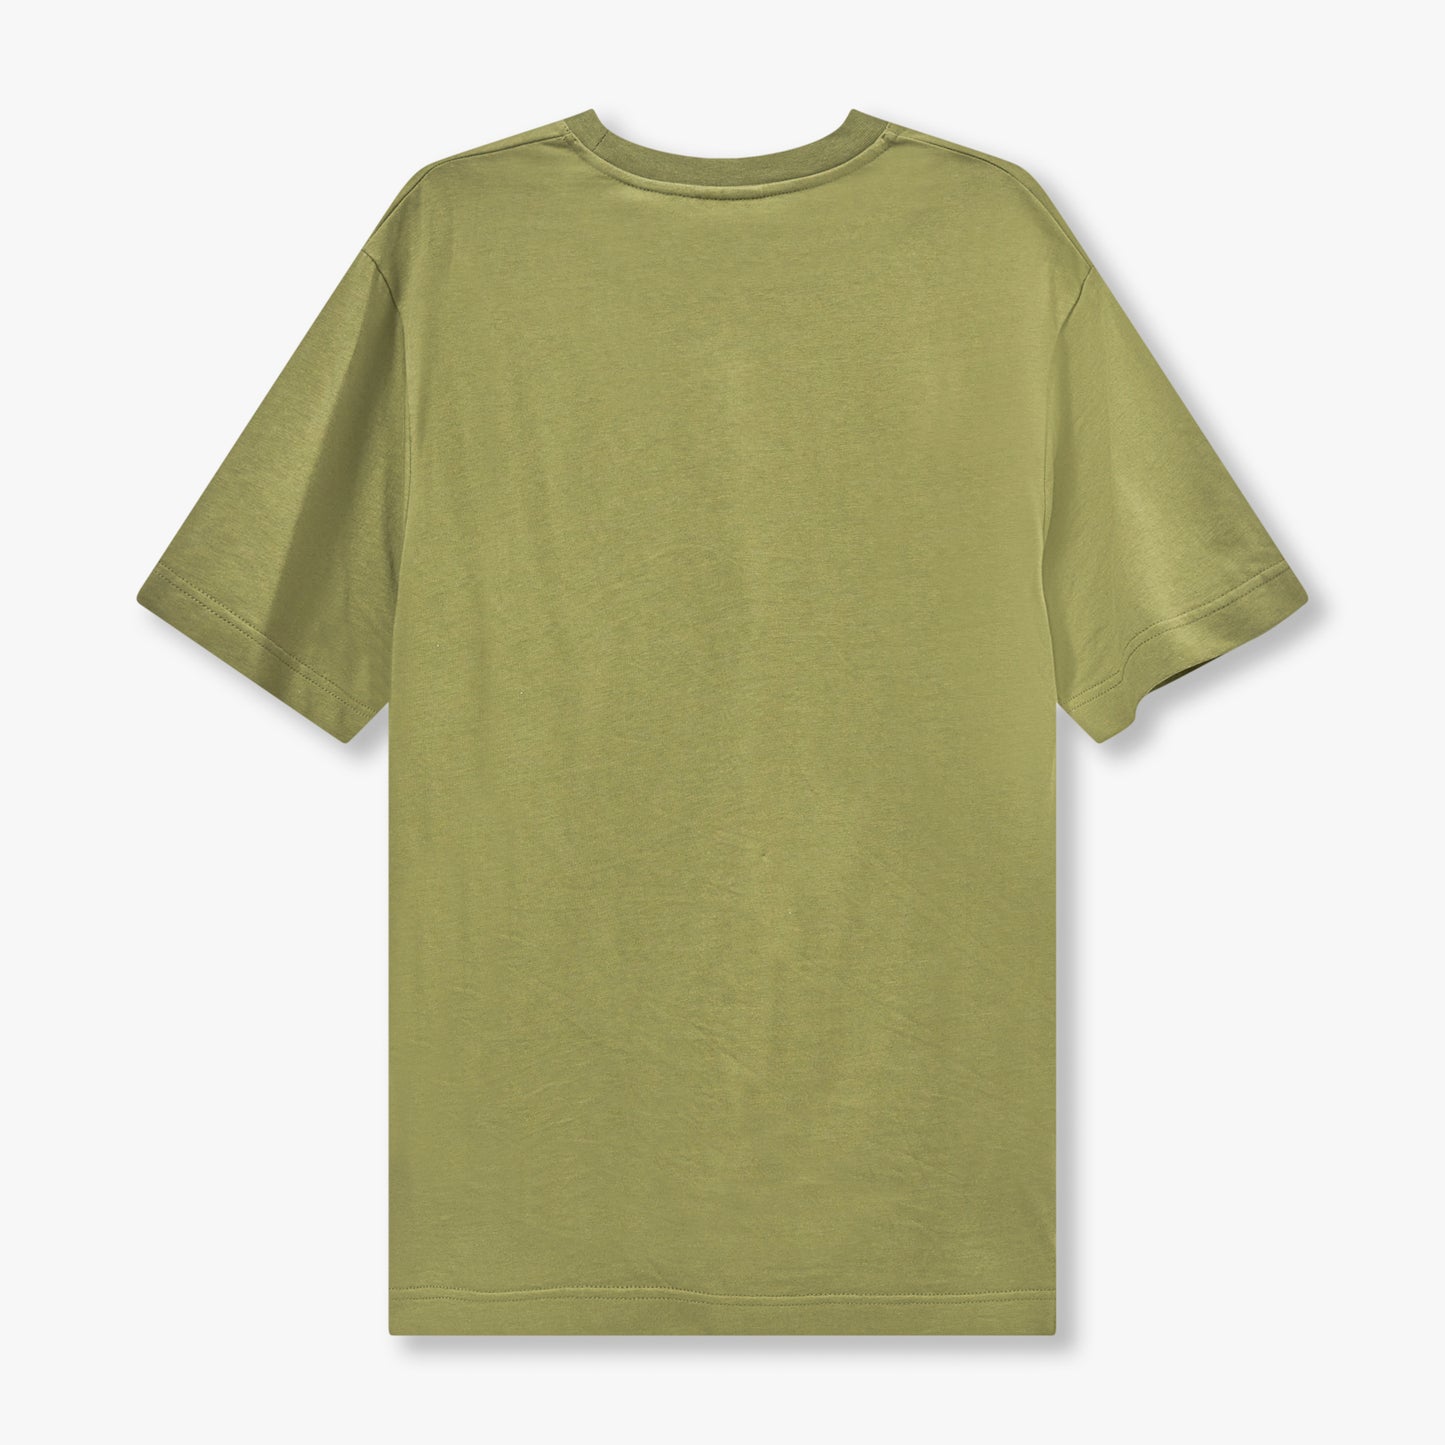 Mens Collective Regular Fit T-Shirt - Olive Green